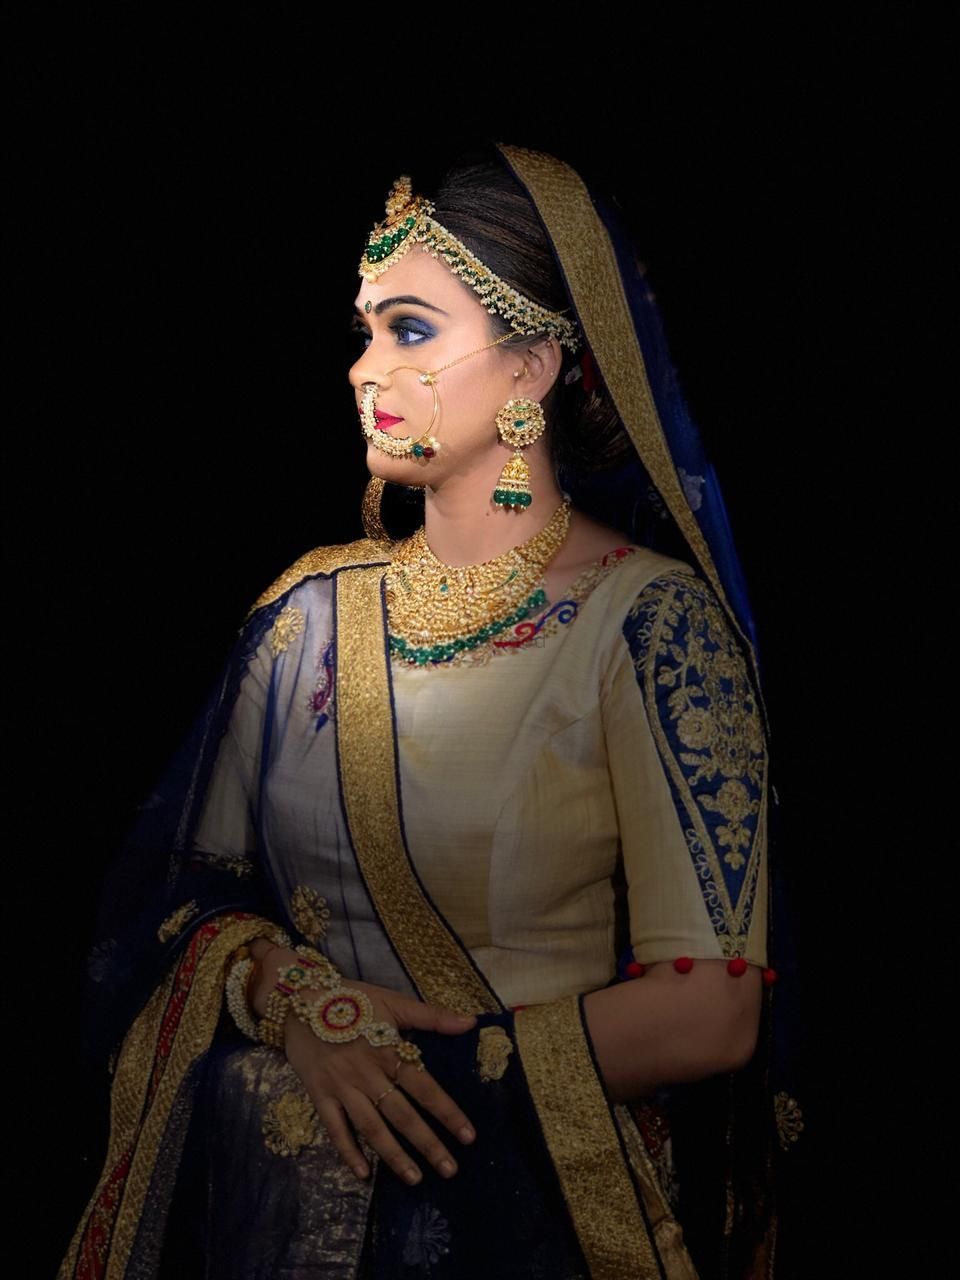 Photo By Archana Thakkar Bridal Studio - Bridal Makeup